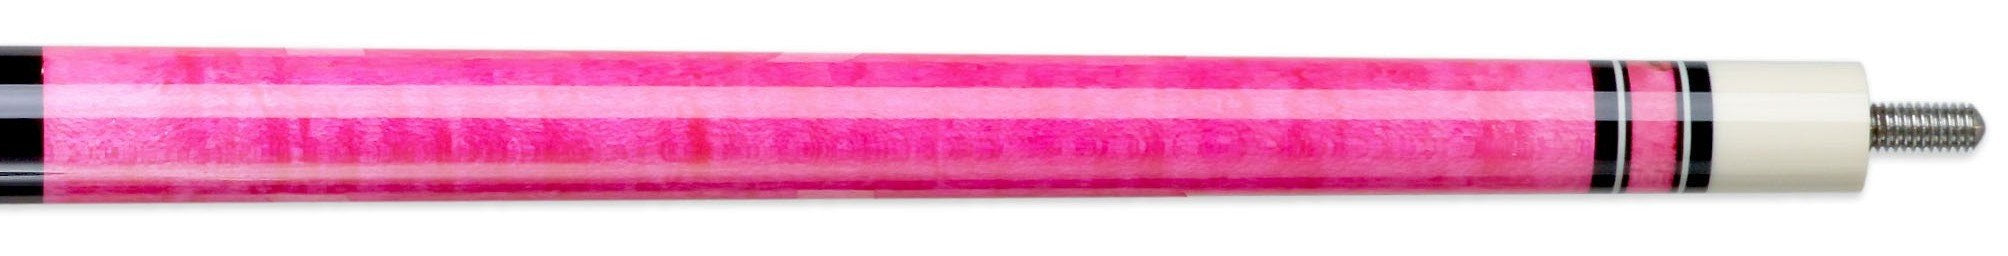 Meucci Meucci Luminous-Pink Pool Cue Pool Cue cue stick